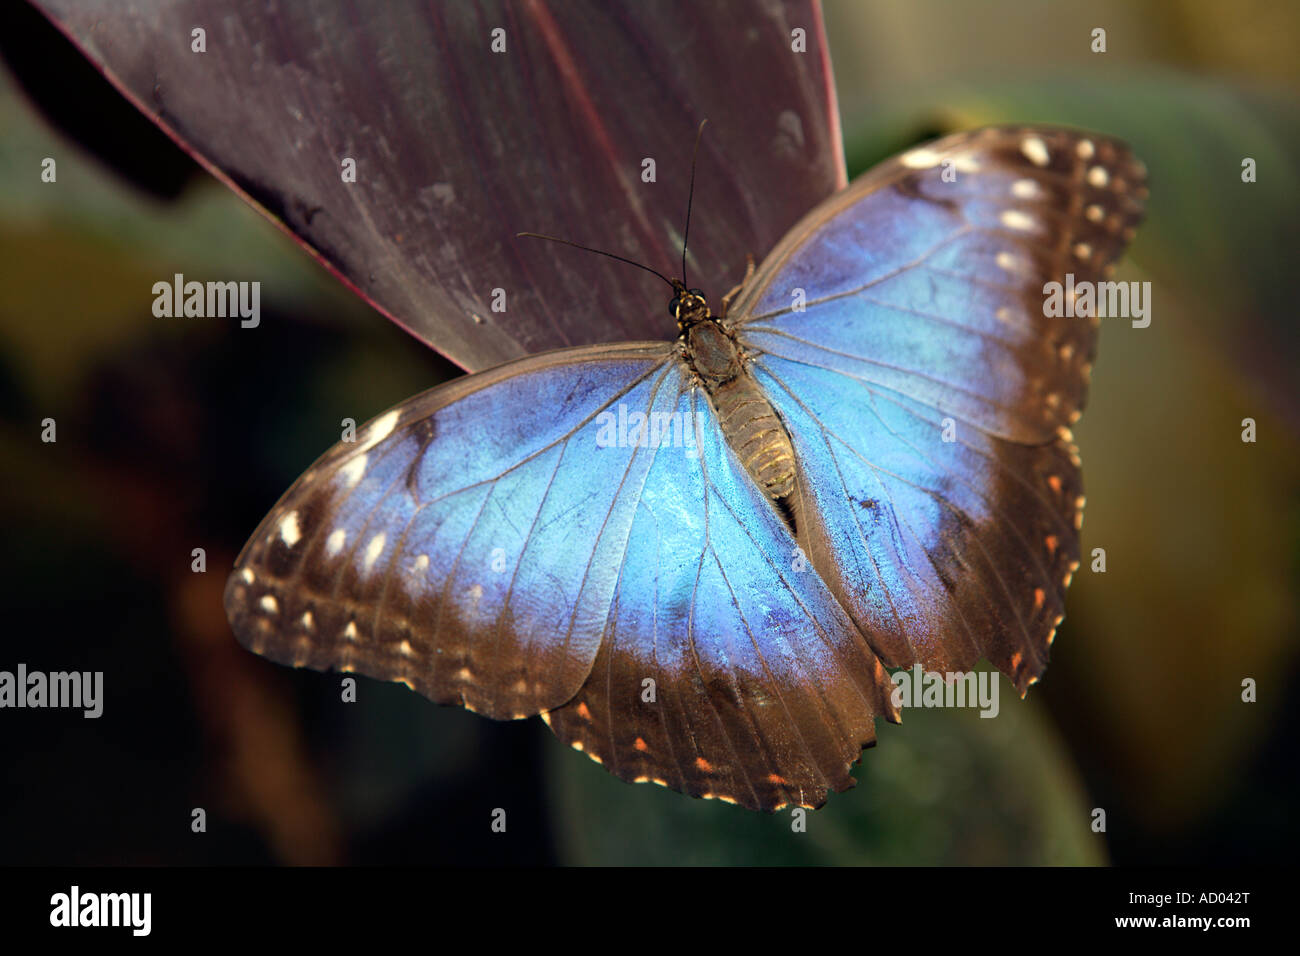 Large blue Butterfly, Symonds Yat, Wye Valley, England. Stock Photo